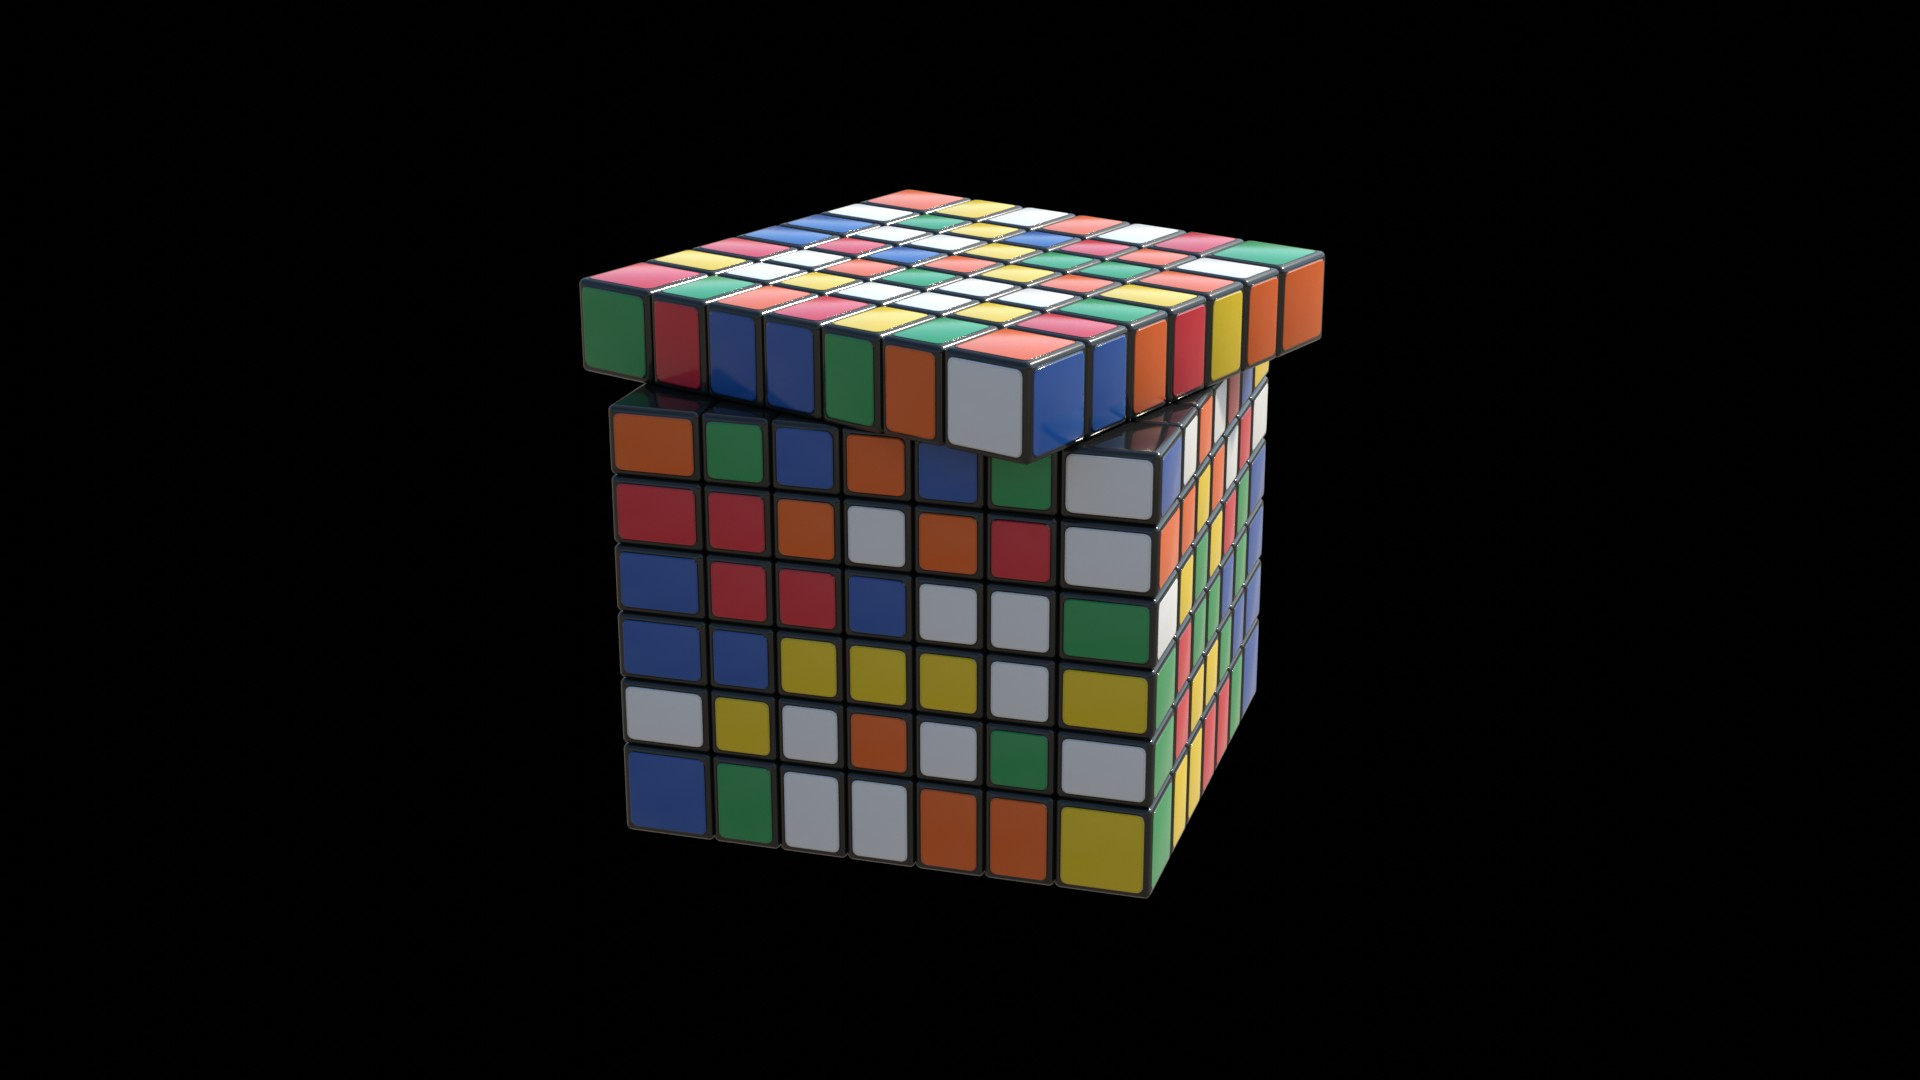 Animated Rubiks Cube 7x7 model - TurboSquid 2081472